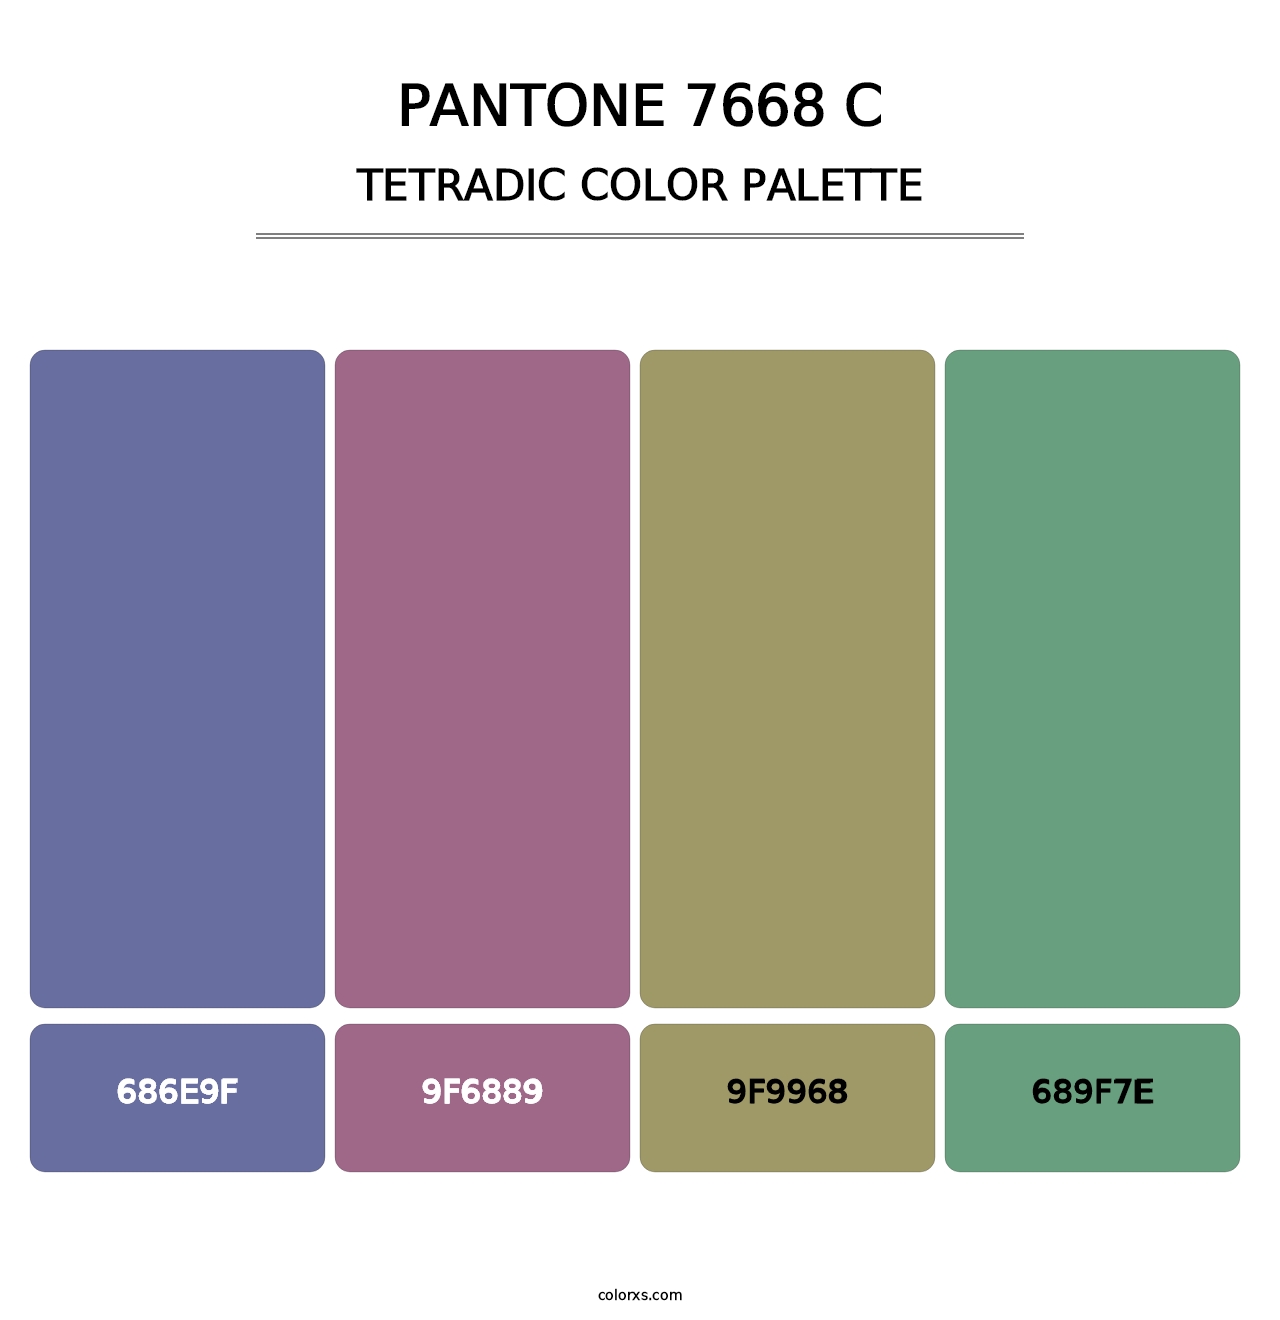 PANTONE 7668 C - Tetradic Color Palette